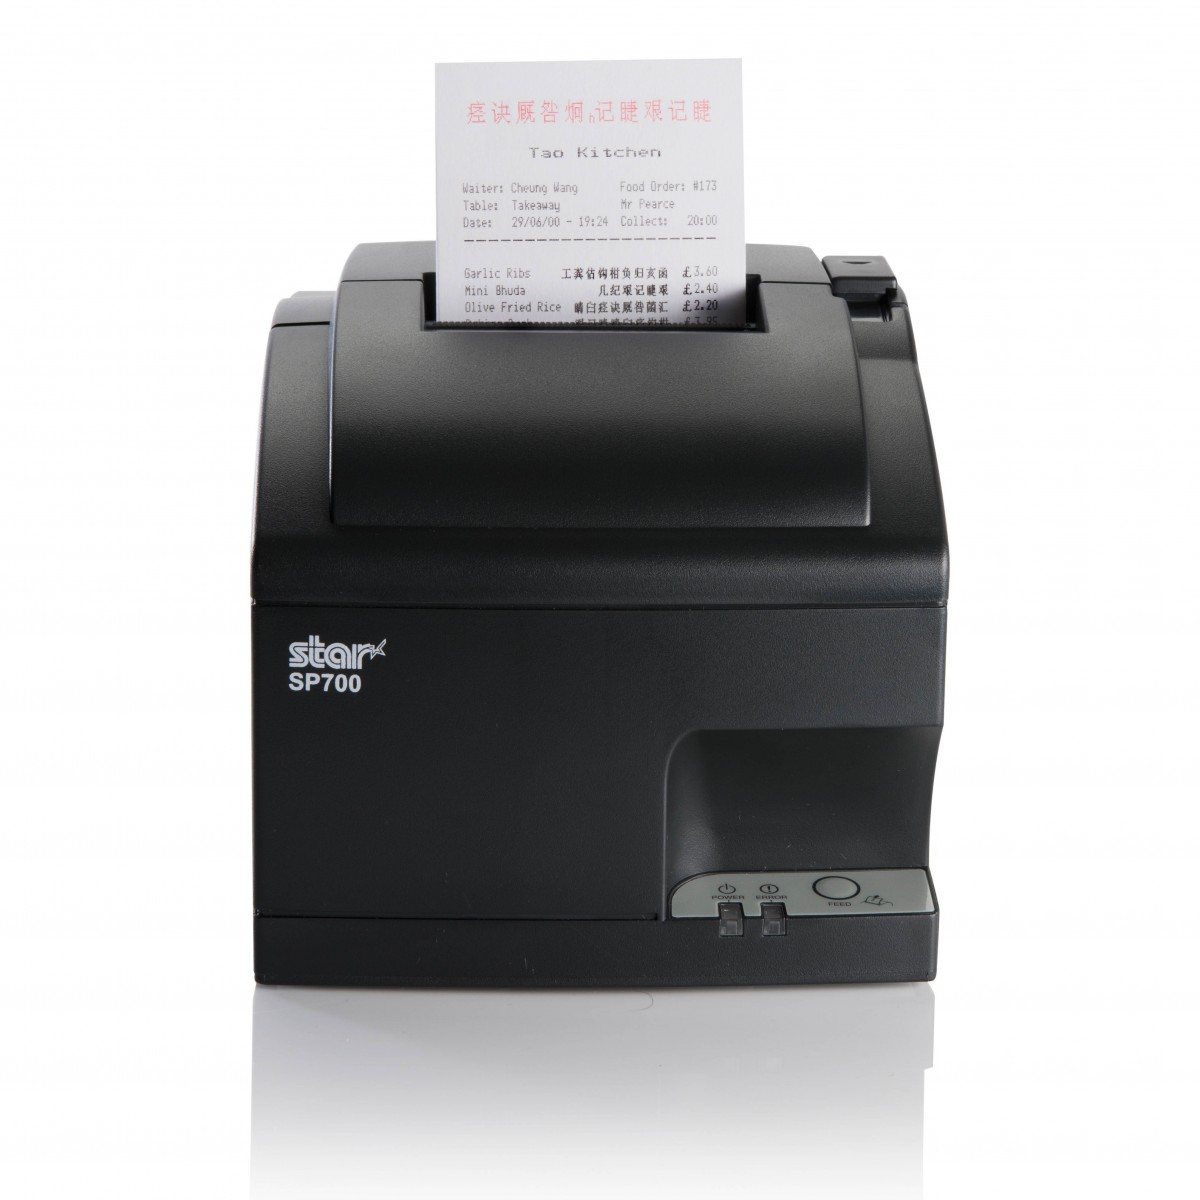 Star Micronics SP700 - Dot matrix - POS printer - 8.9 lps - 76 mm - White - 3.18 kg